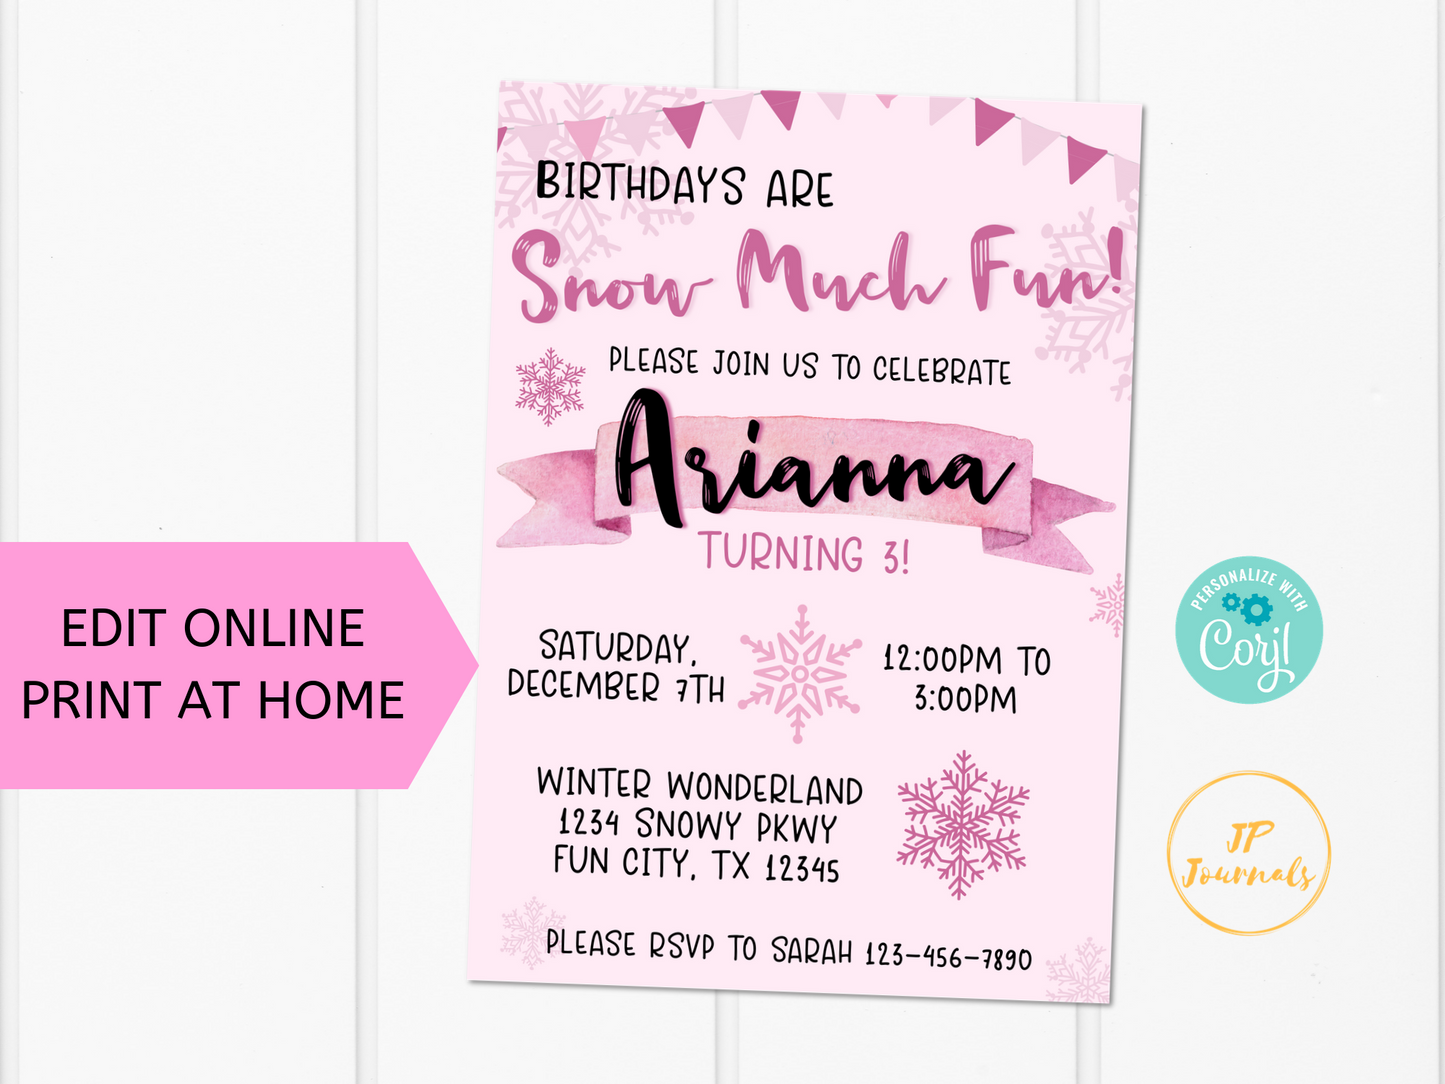 Snow Much Fun Birthday Party Invitation Template - Pink Winter Wonderland for Girls - Edit & Print - Printable Invitation - Cute Snowflakes